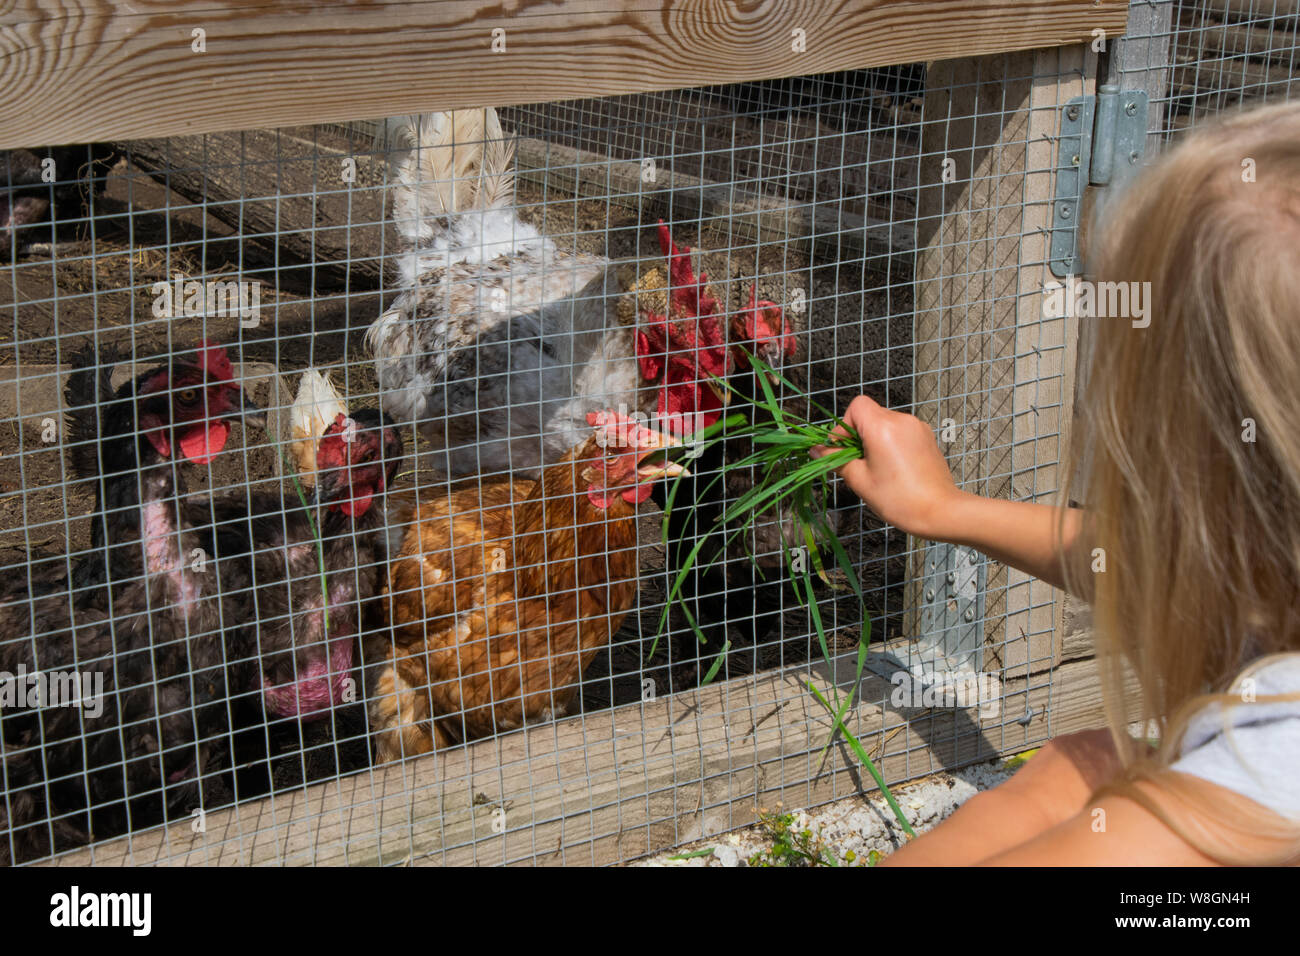 child feeding chickens Stock Photo